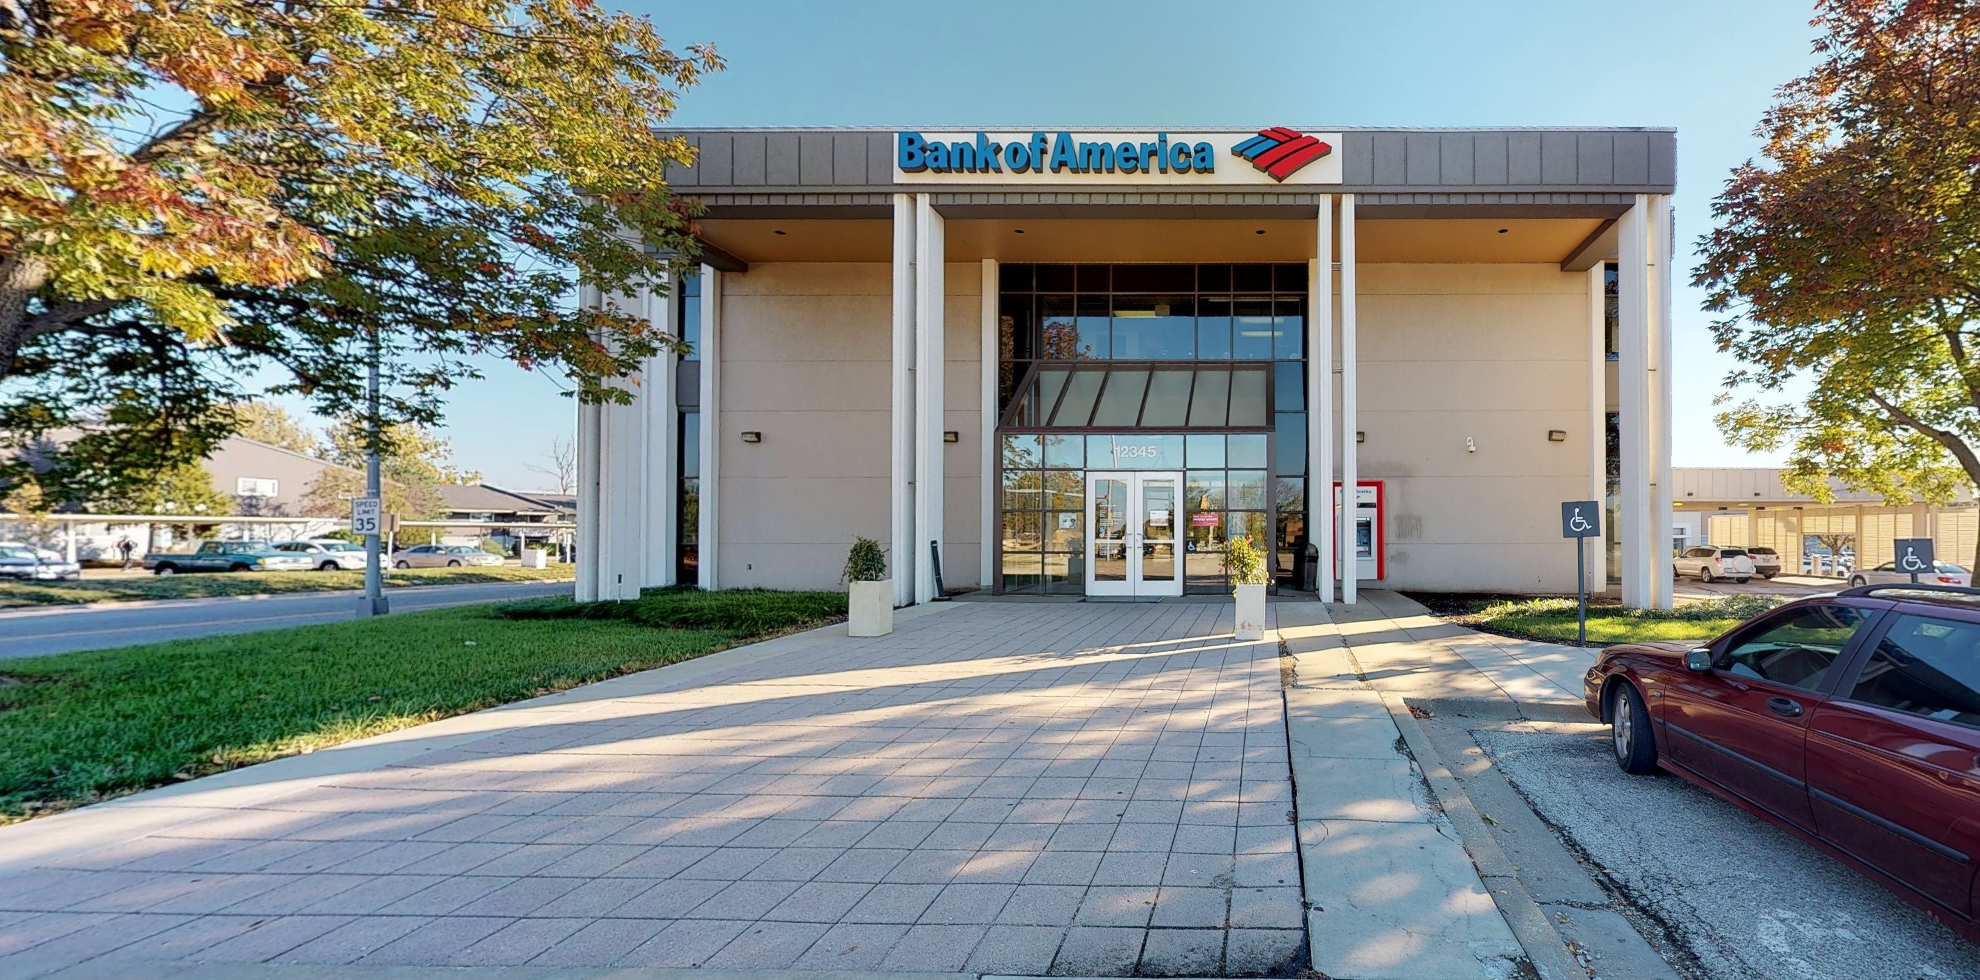 Bank of America financial center with drive-thru ATM | 12345 W 95th St, Lenexa, KS 66215